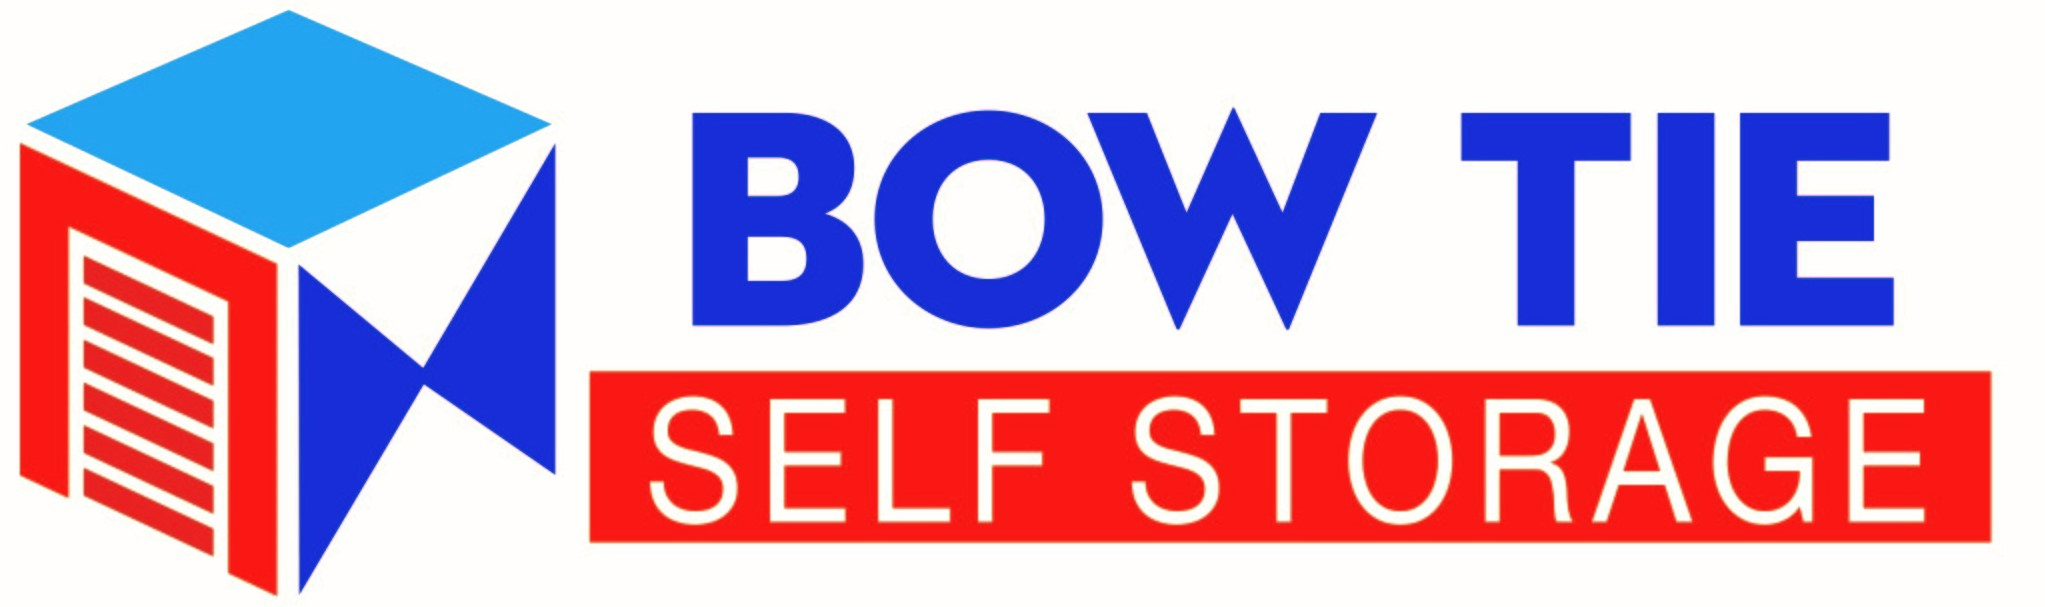 Bow Tie Self Storage Louisville KY logo